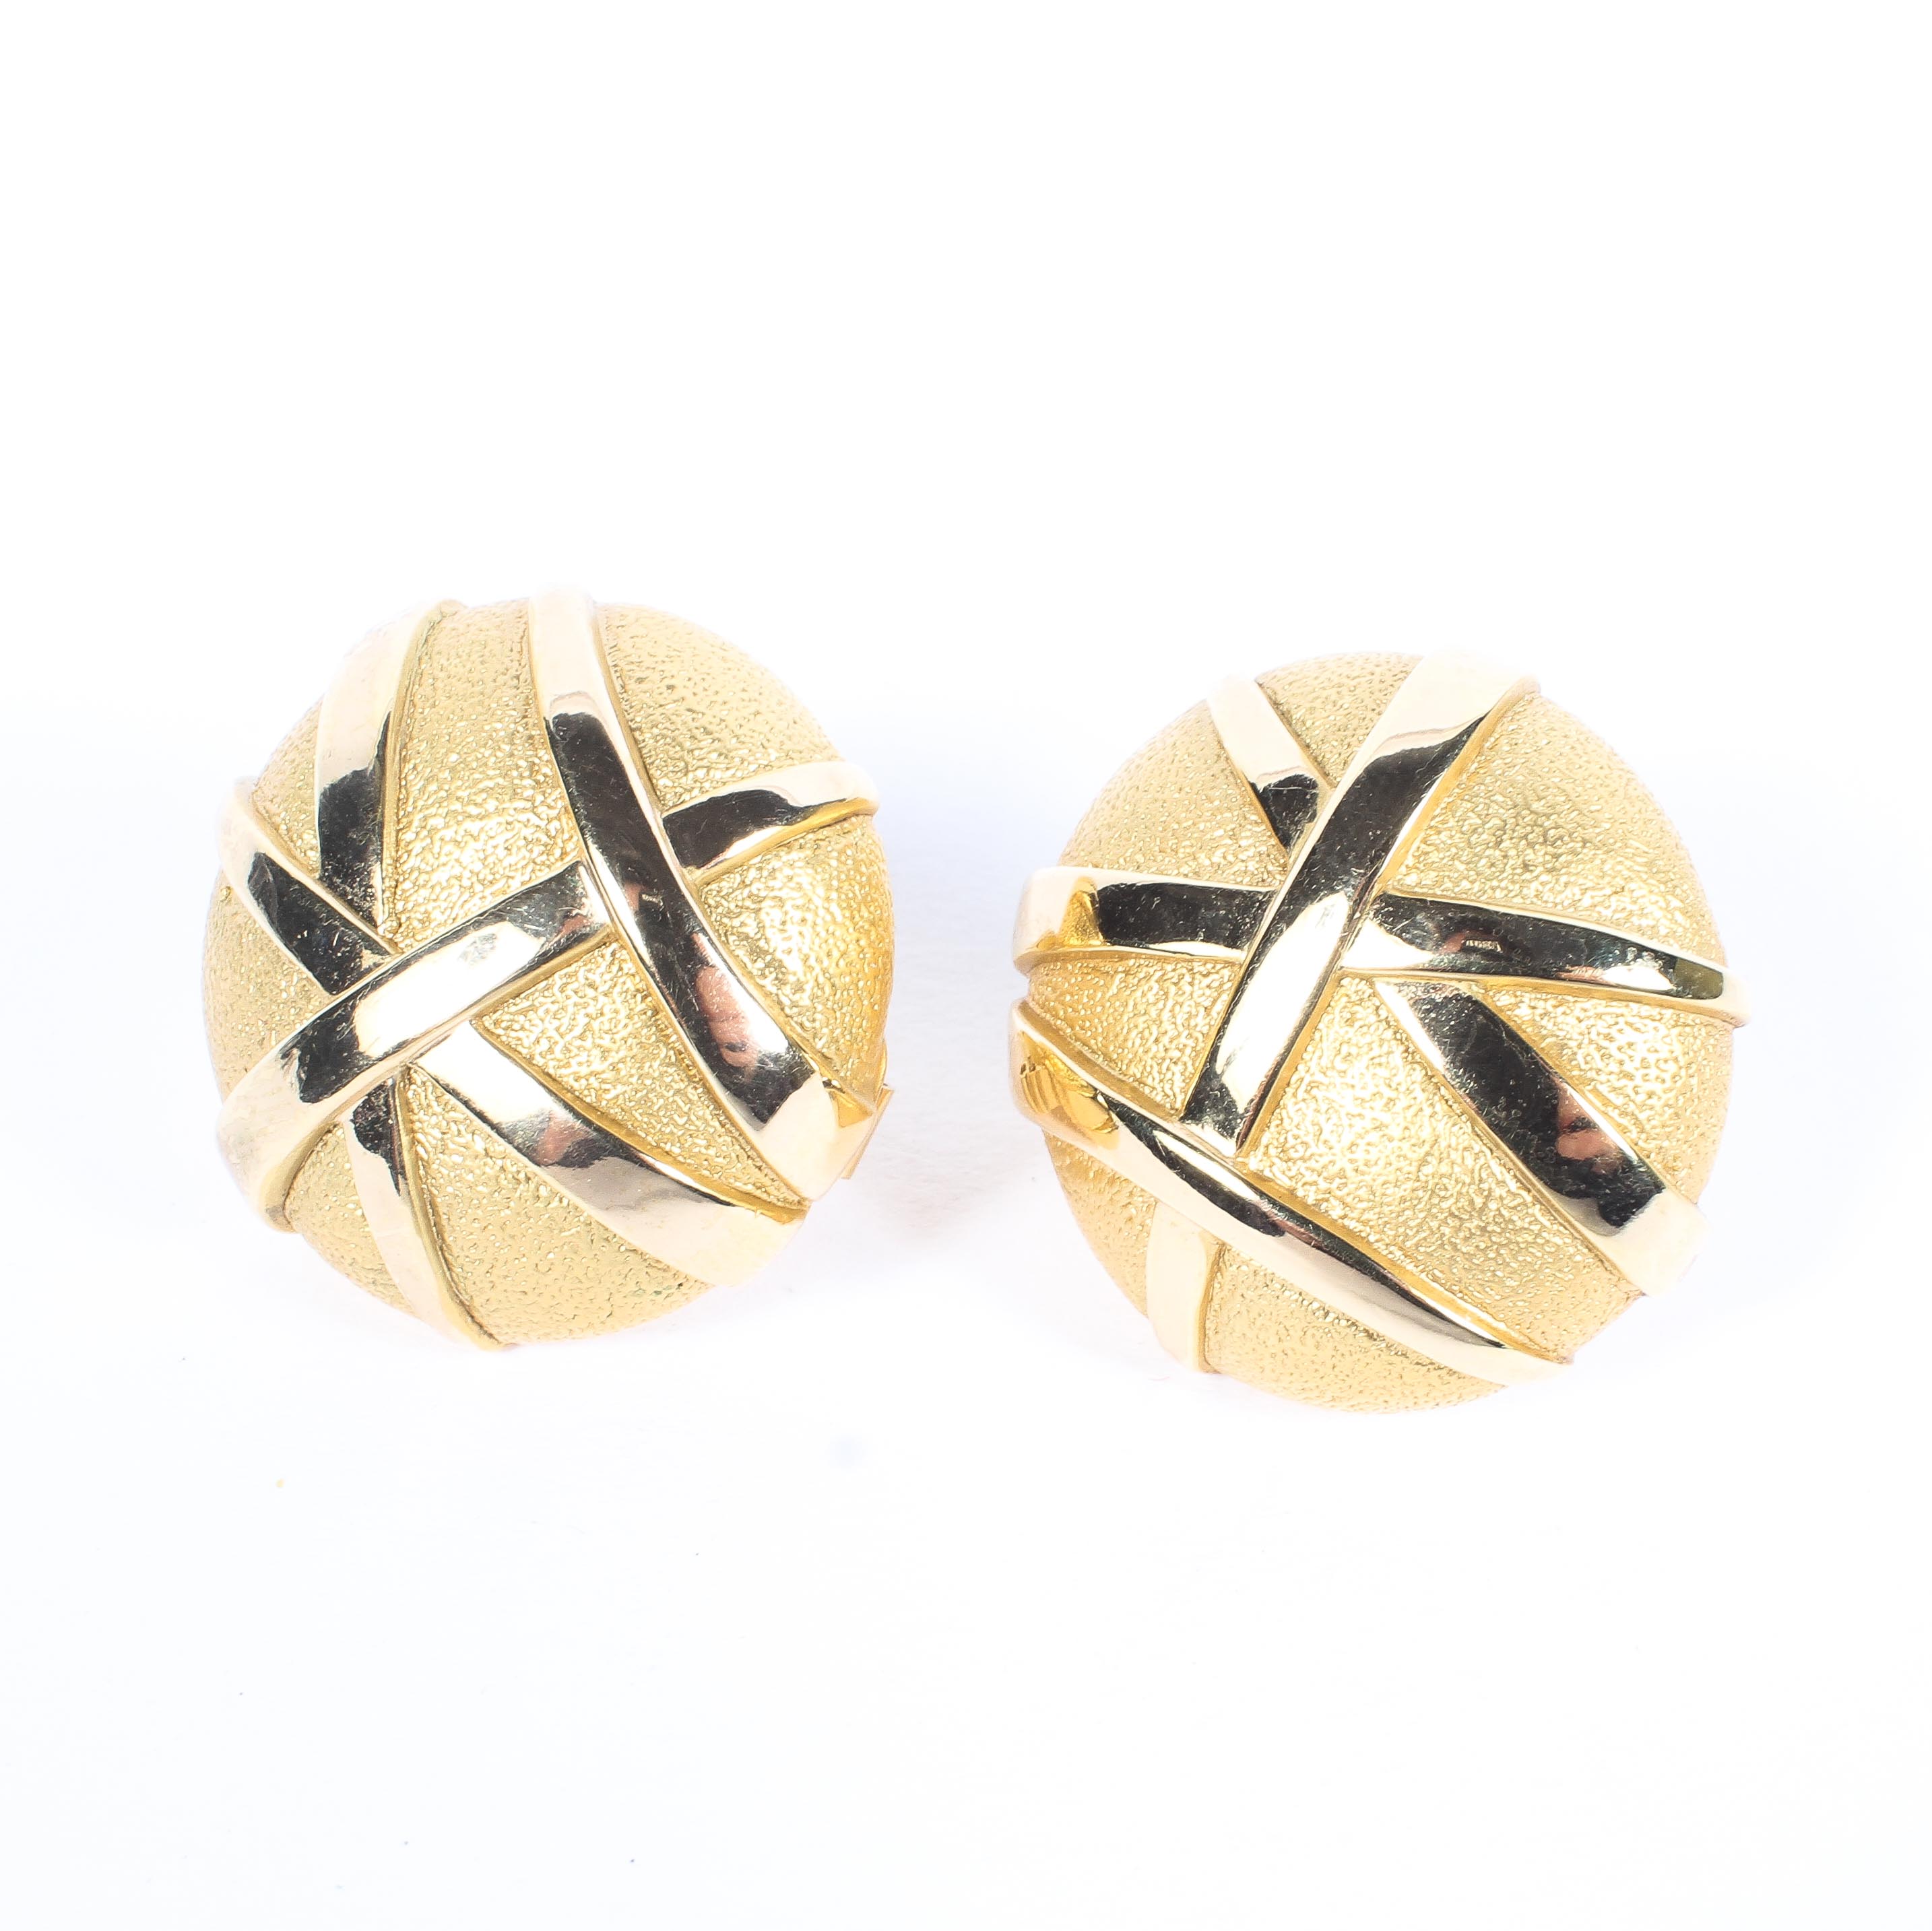 A pair of 18ct gold circular earrings by Charles Garnier, Paris, 8.